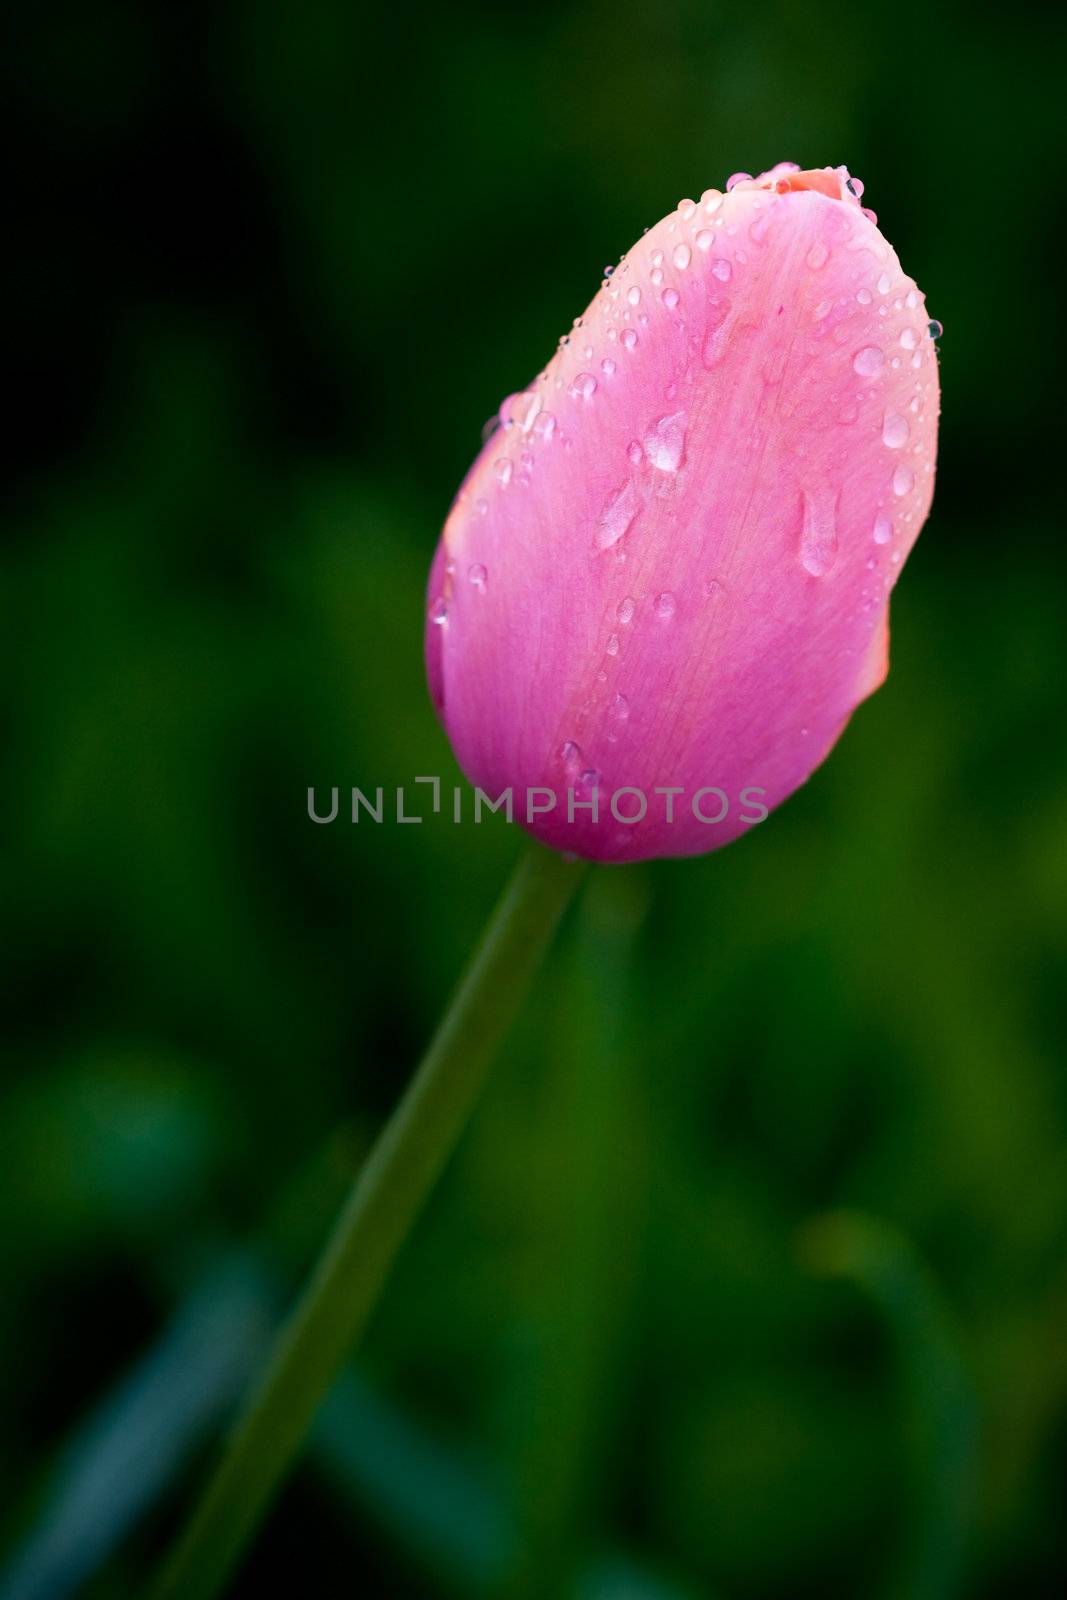 Closeup on a pink tulip, flower macro